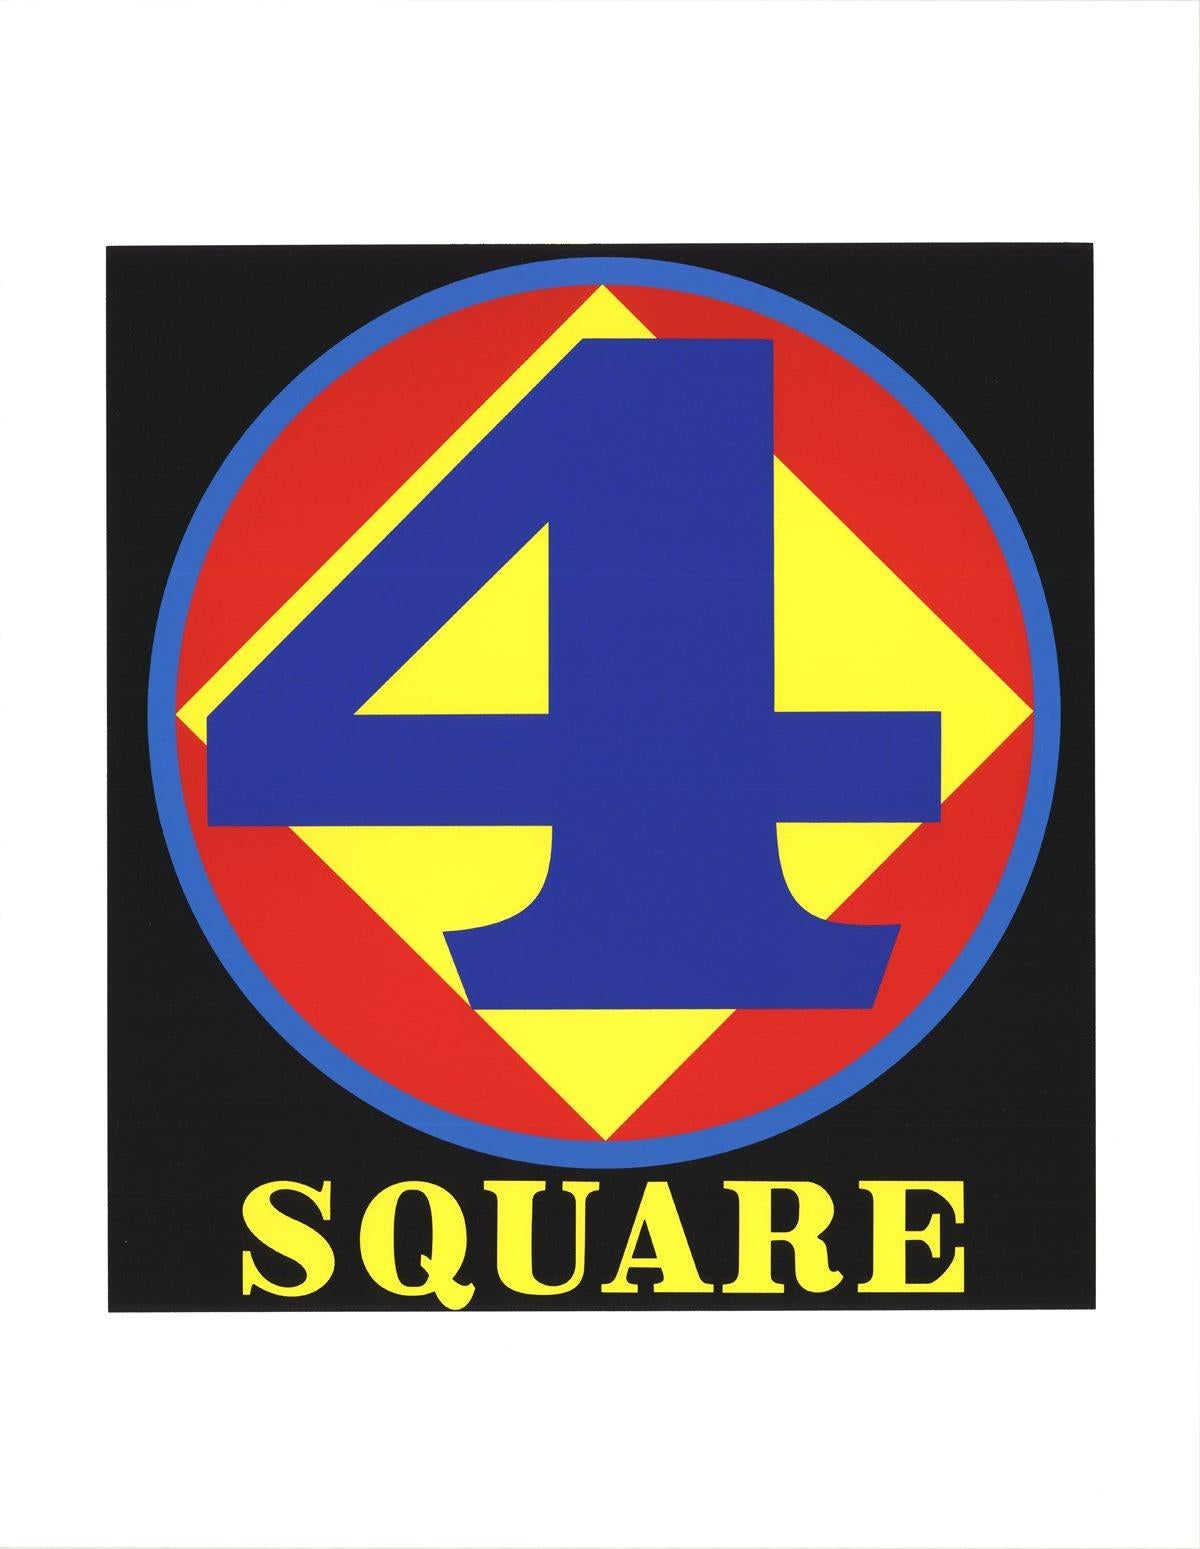 4 square pop art